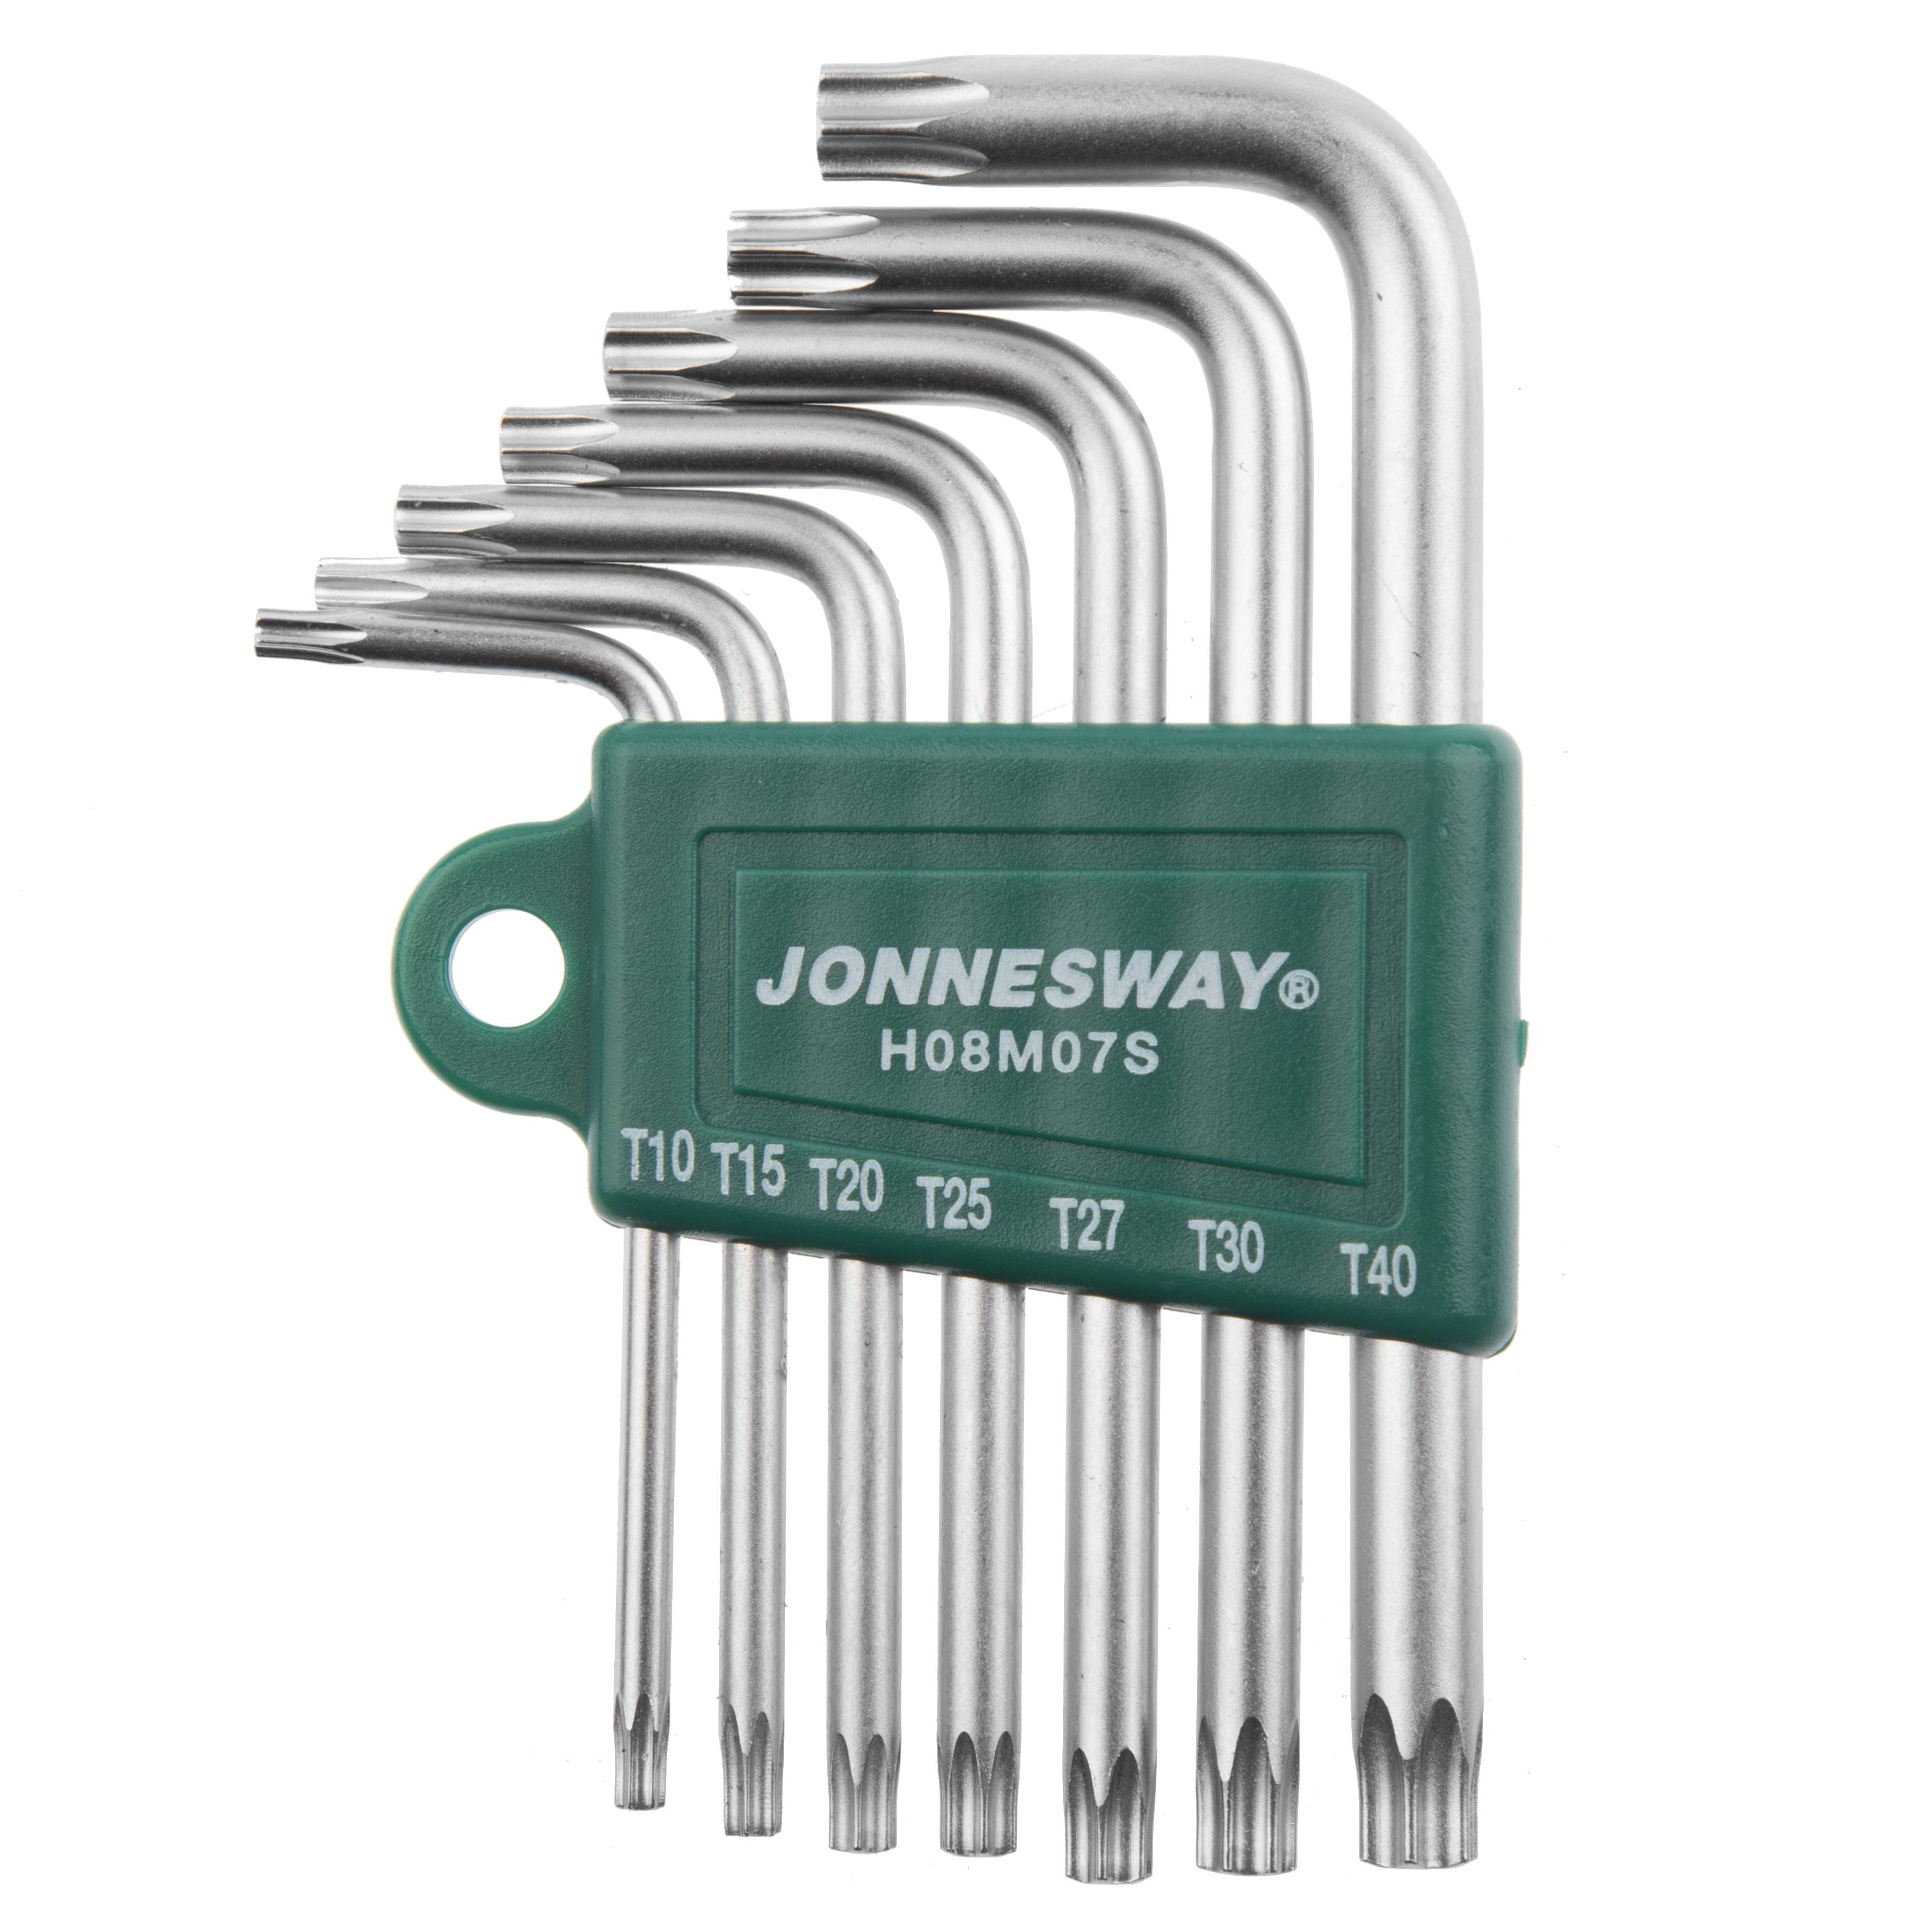 Набор шестигранных ключей Jonnesway H08m07s